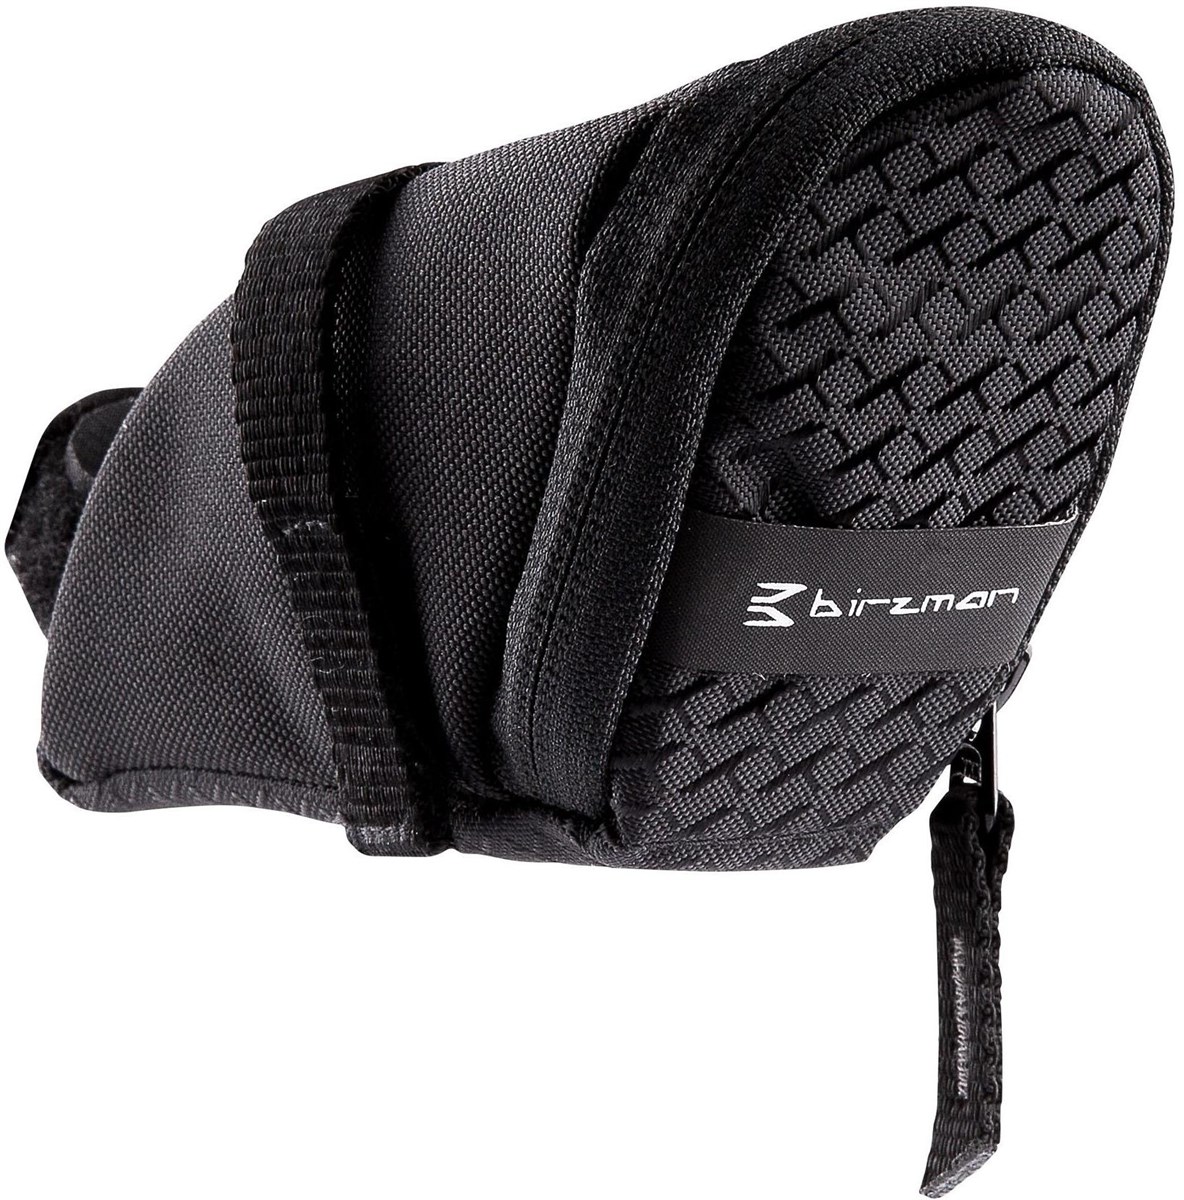 Birzman Zyklop Nip Saddle Bag product image